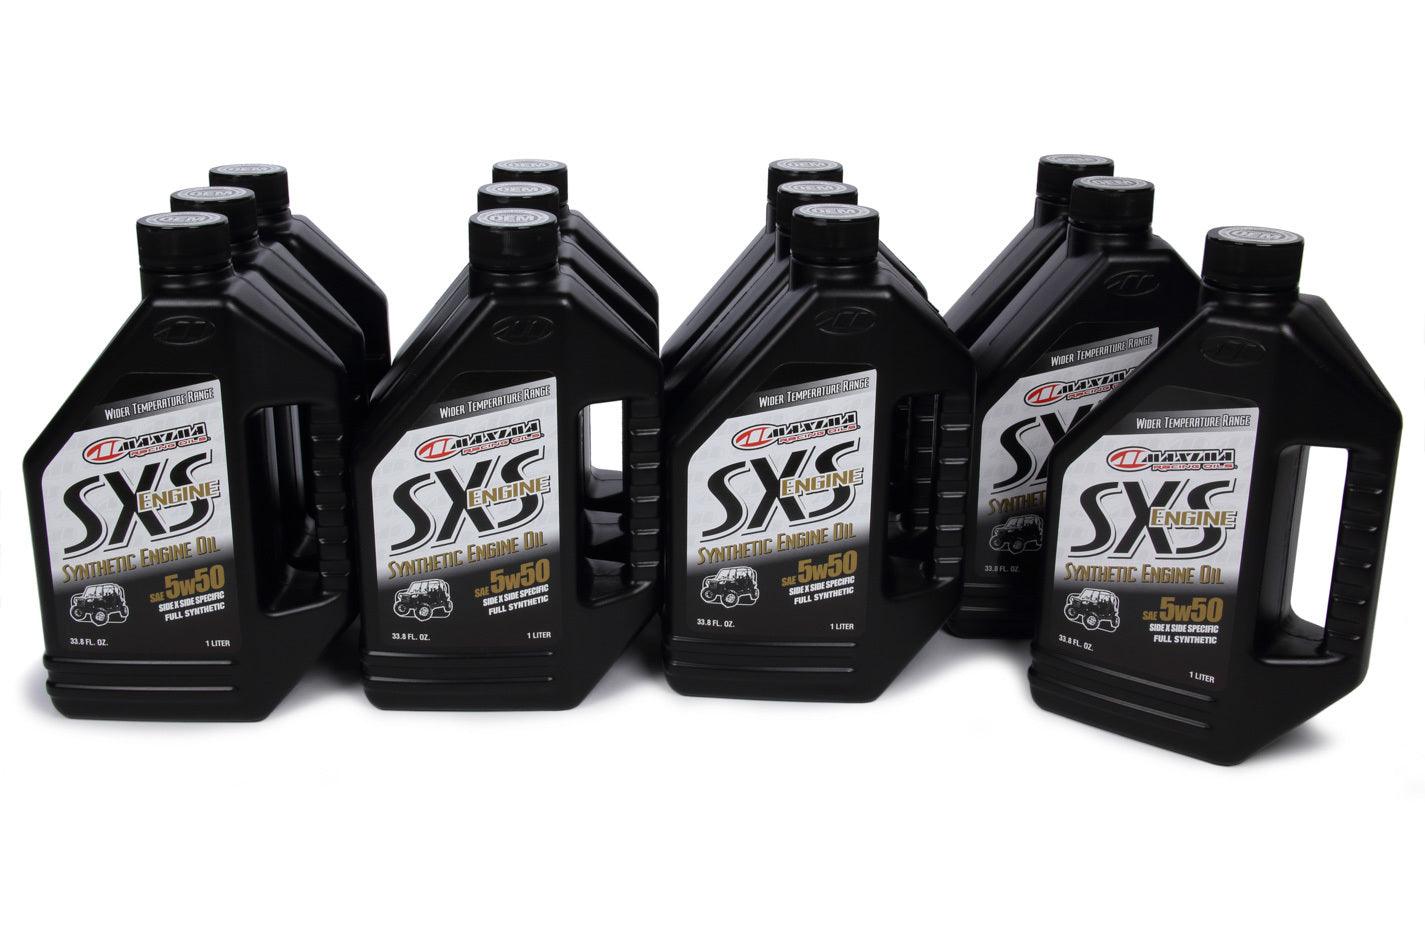 SXS Engine Full Syntheti c 5w50 Case 12 x 1 Liter - Burlile Performance Products